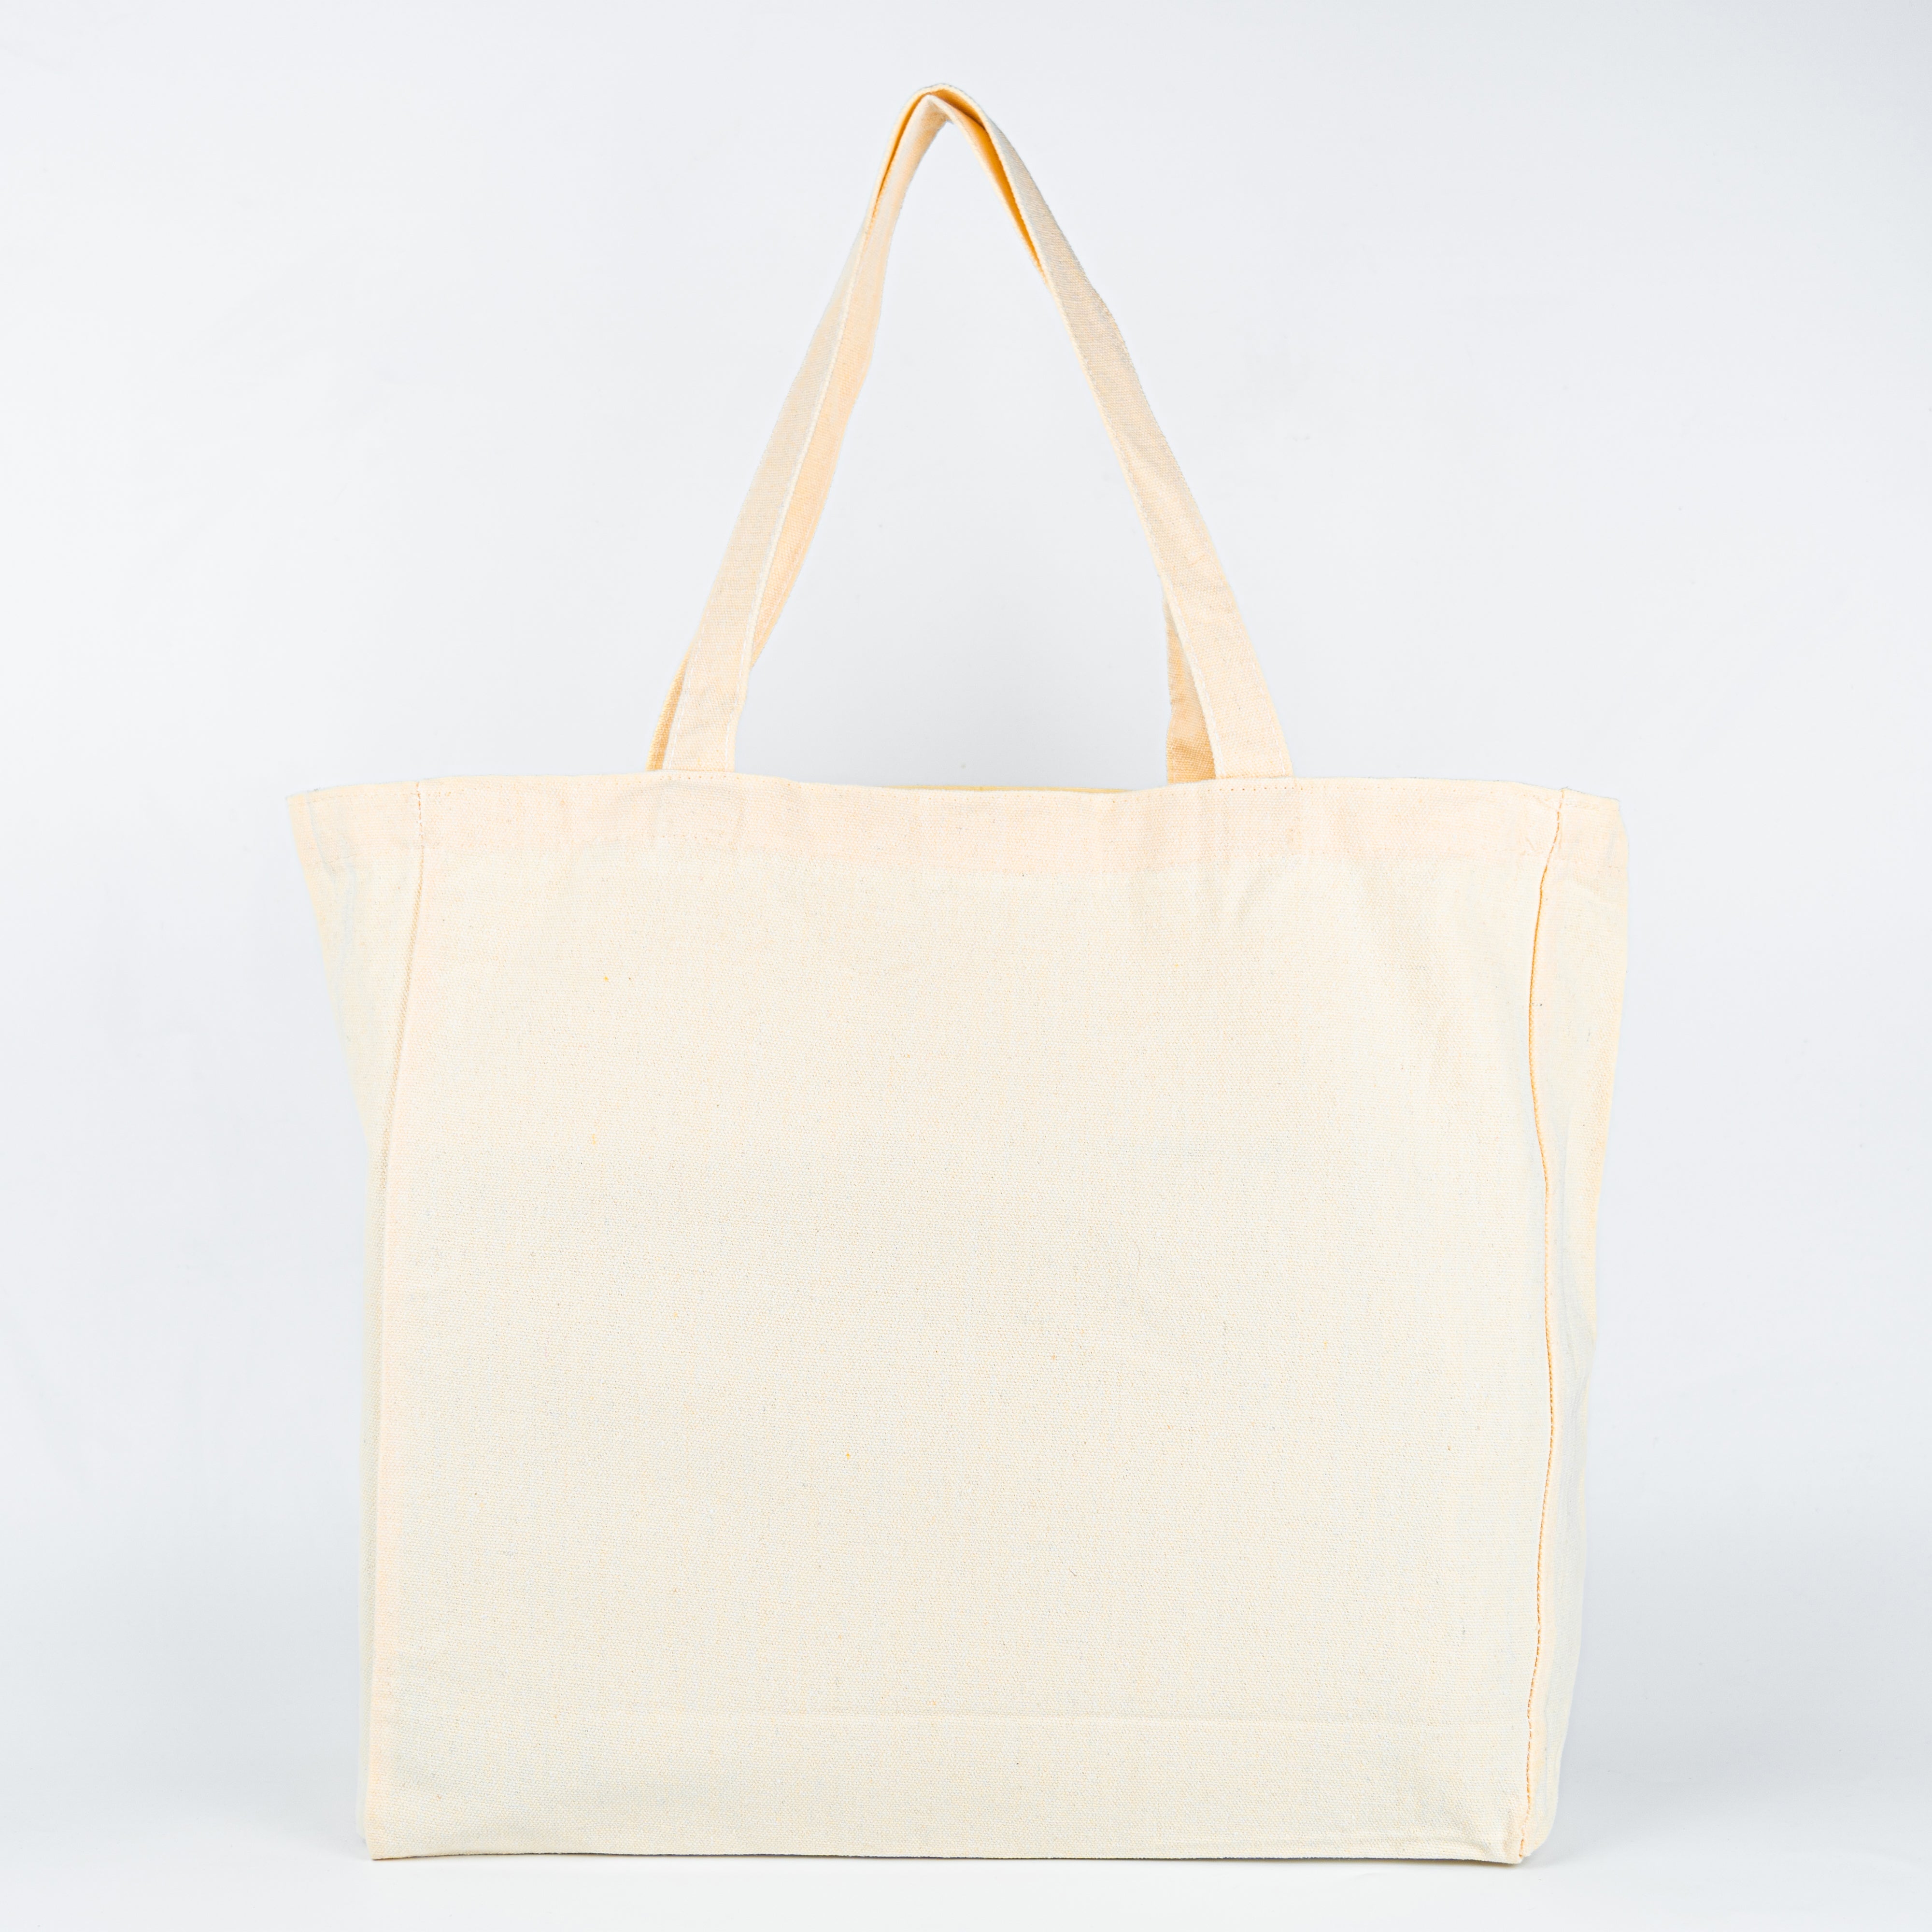 OCDEE™ Eco-Tastic Bag [2nd Anniversary Special]